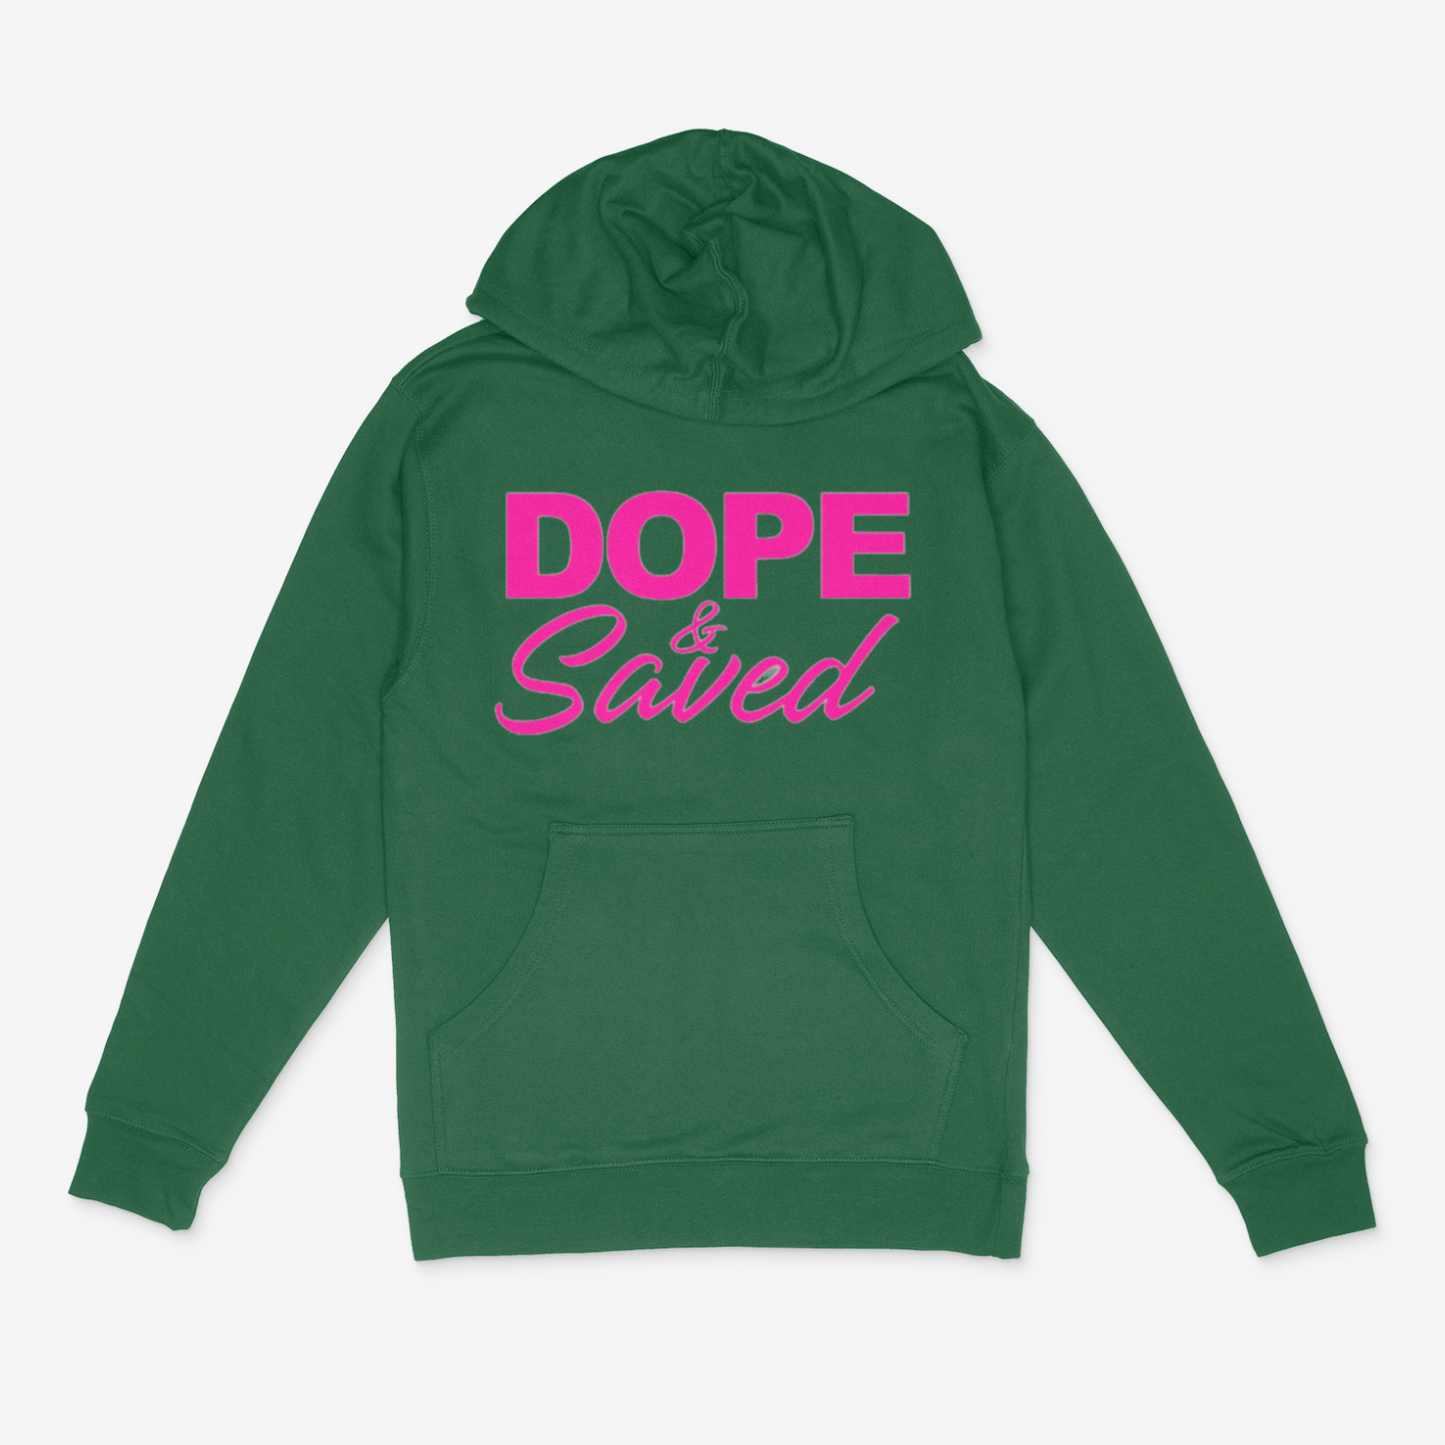 Dope and Saved Hoodie (Pink)